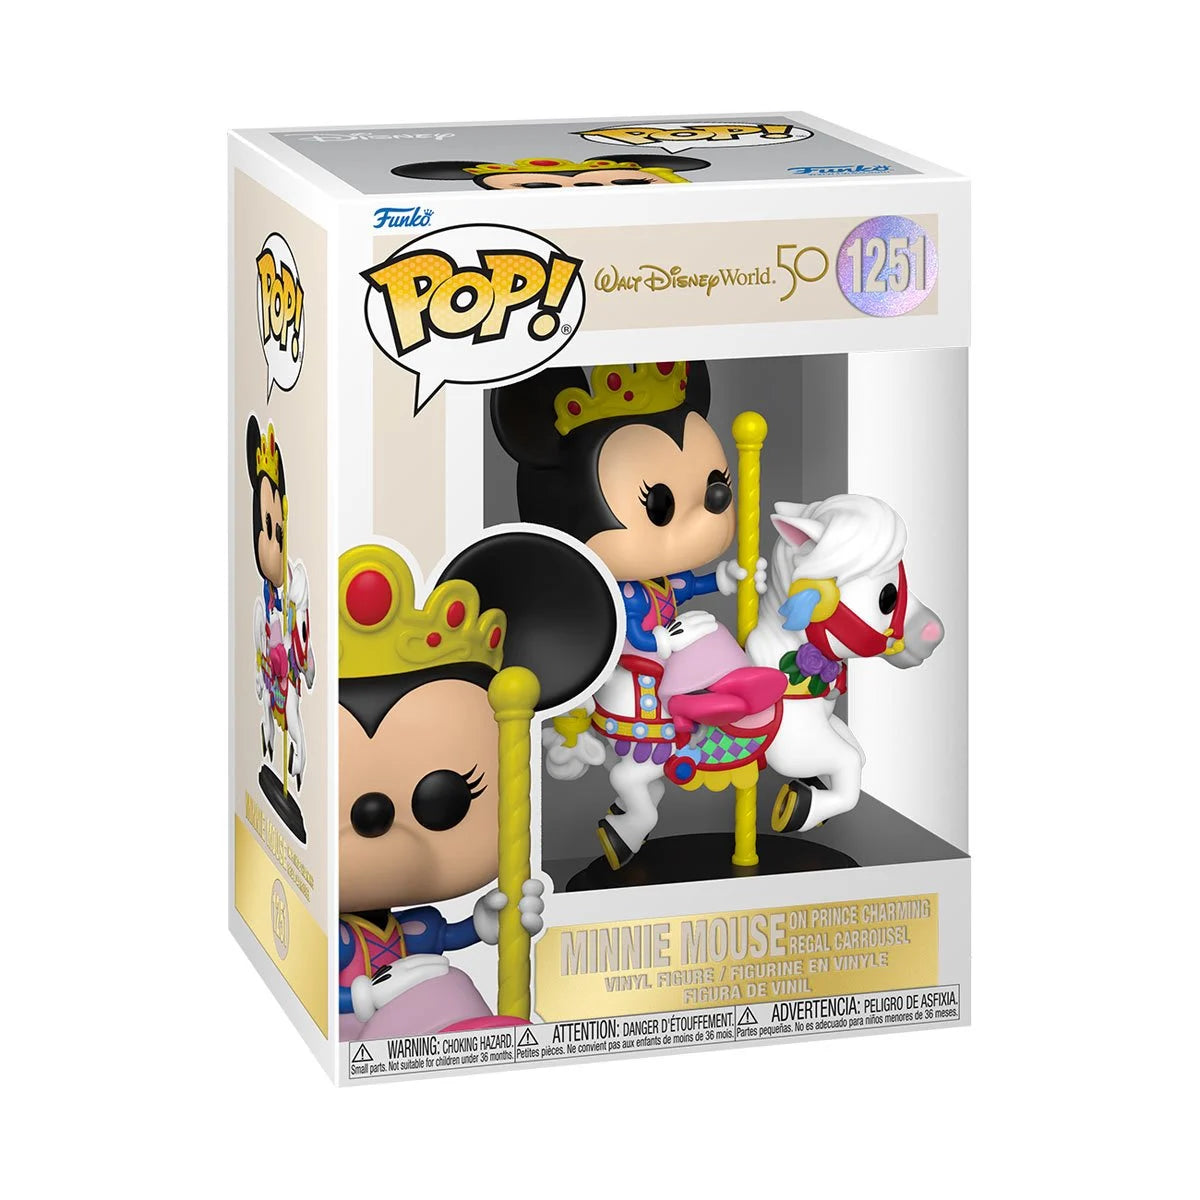 Minnie Mouse Walt Disney World 50th Anniversary on Prince Charming Regal Carrousel Pop! Vinyl Figure